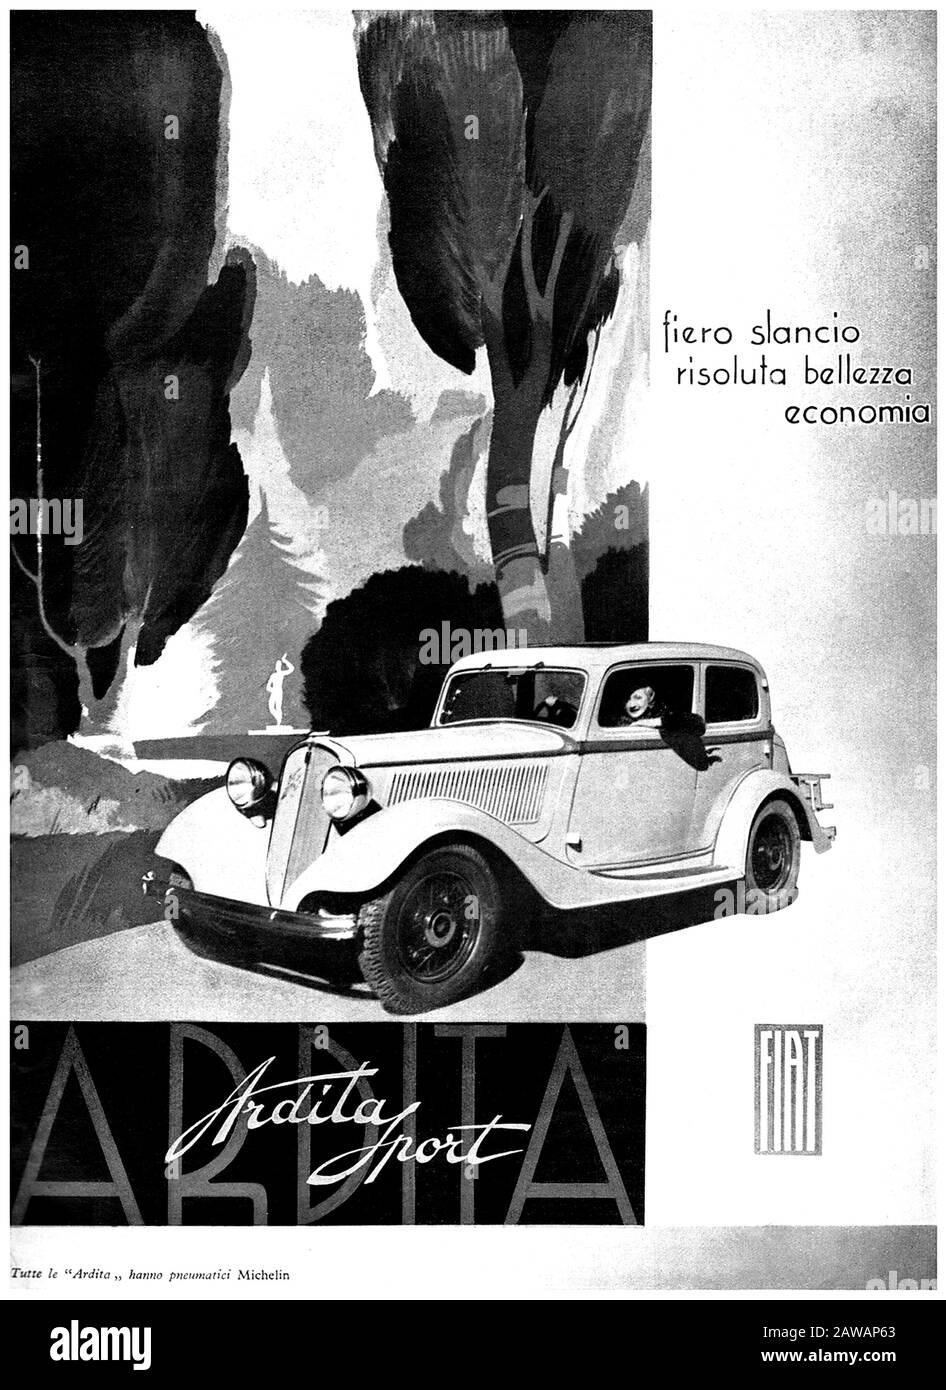 1933 , ITALY : The italian car industry FIAT ( F.I.A.T. Fabbrica Italiana Automobili Torino ) advertising for the new model ARDITA SPORT  - automobile Stock Photo